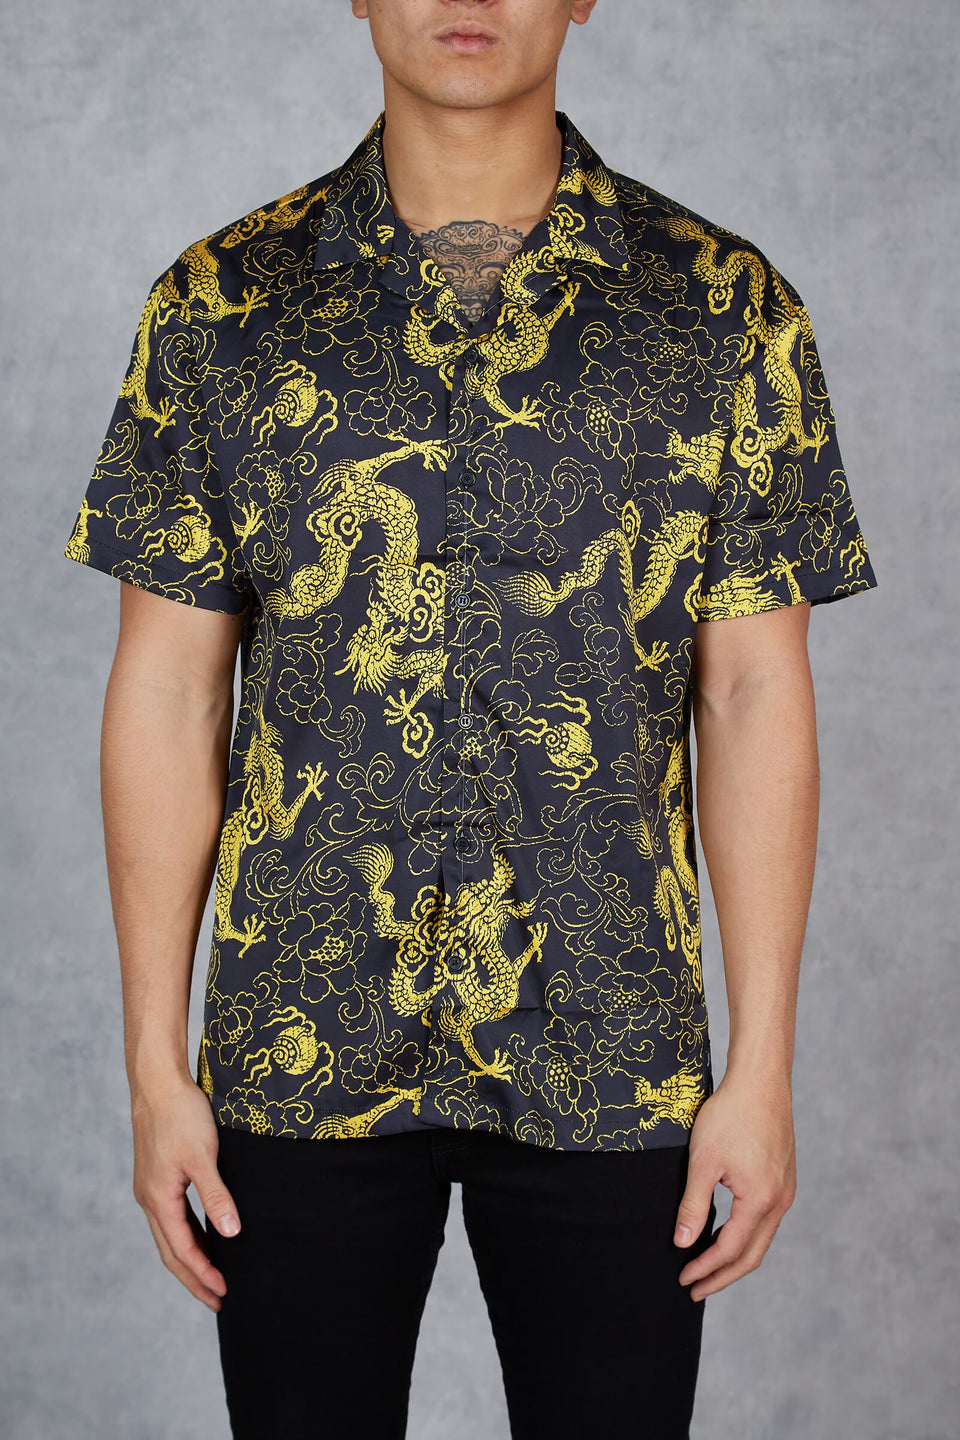 Machida Oriental Printed Short Sleeve Shirt - Black/Yellow